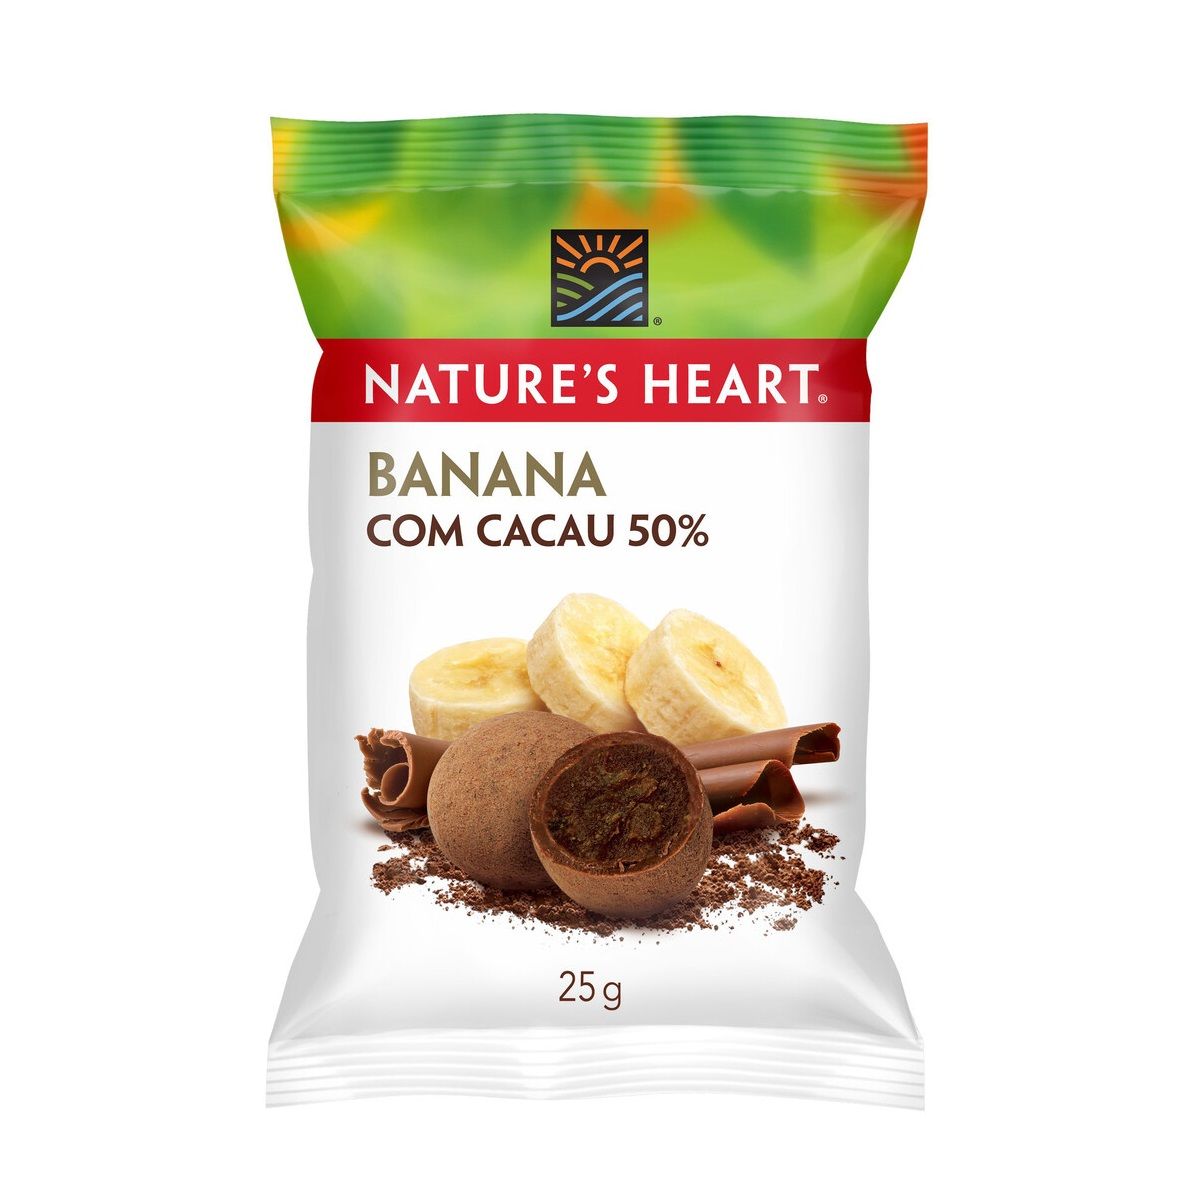 Banana com Cacau 50% Nature's Heart Pacote 25g image number 0